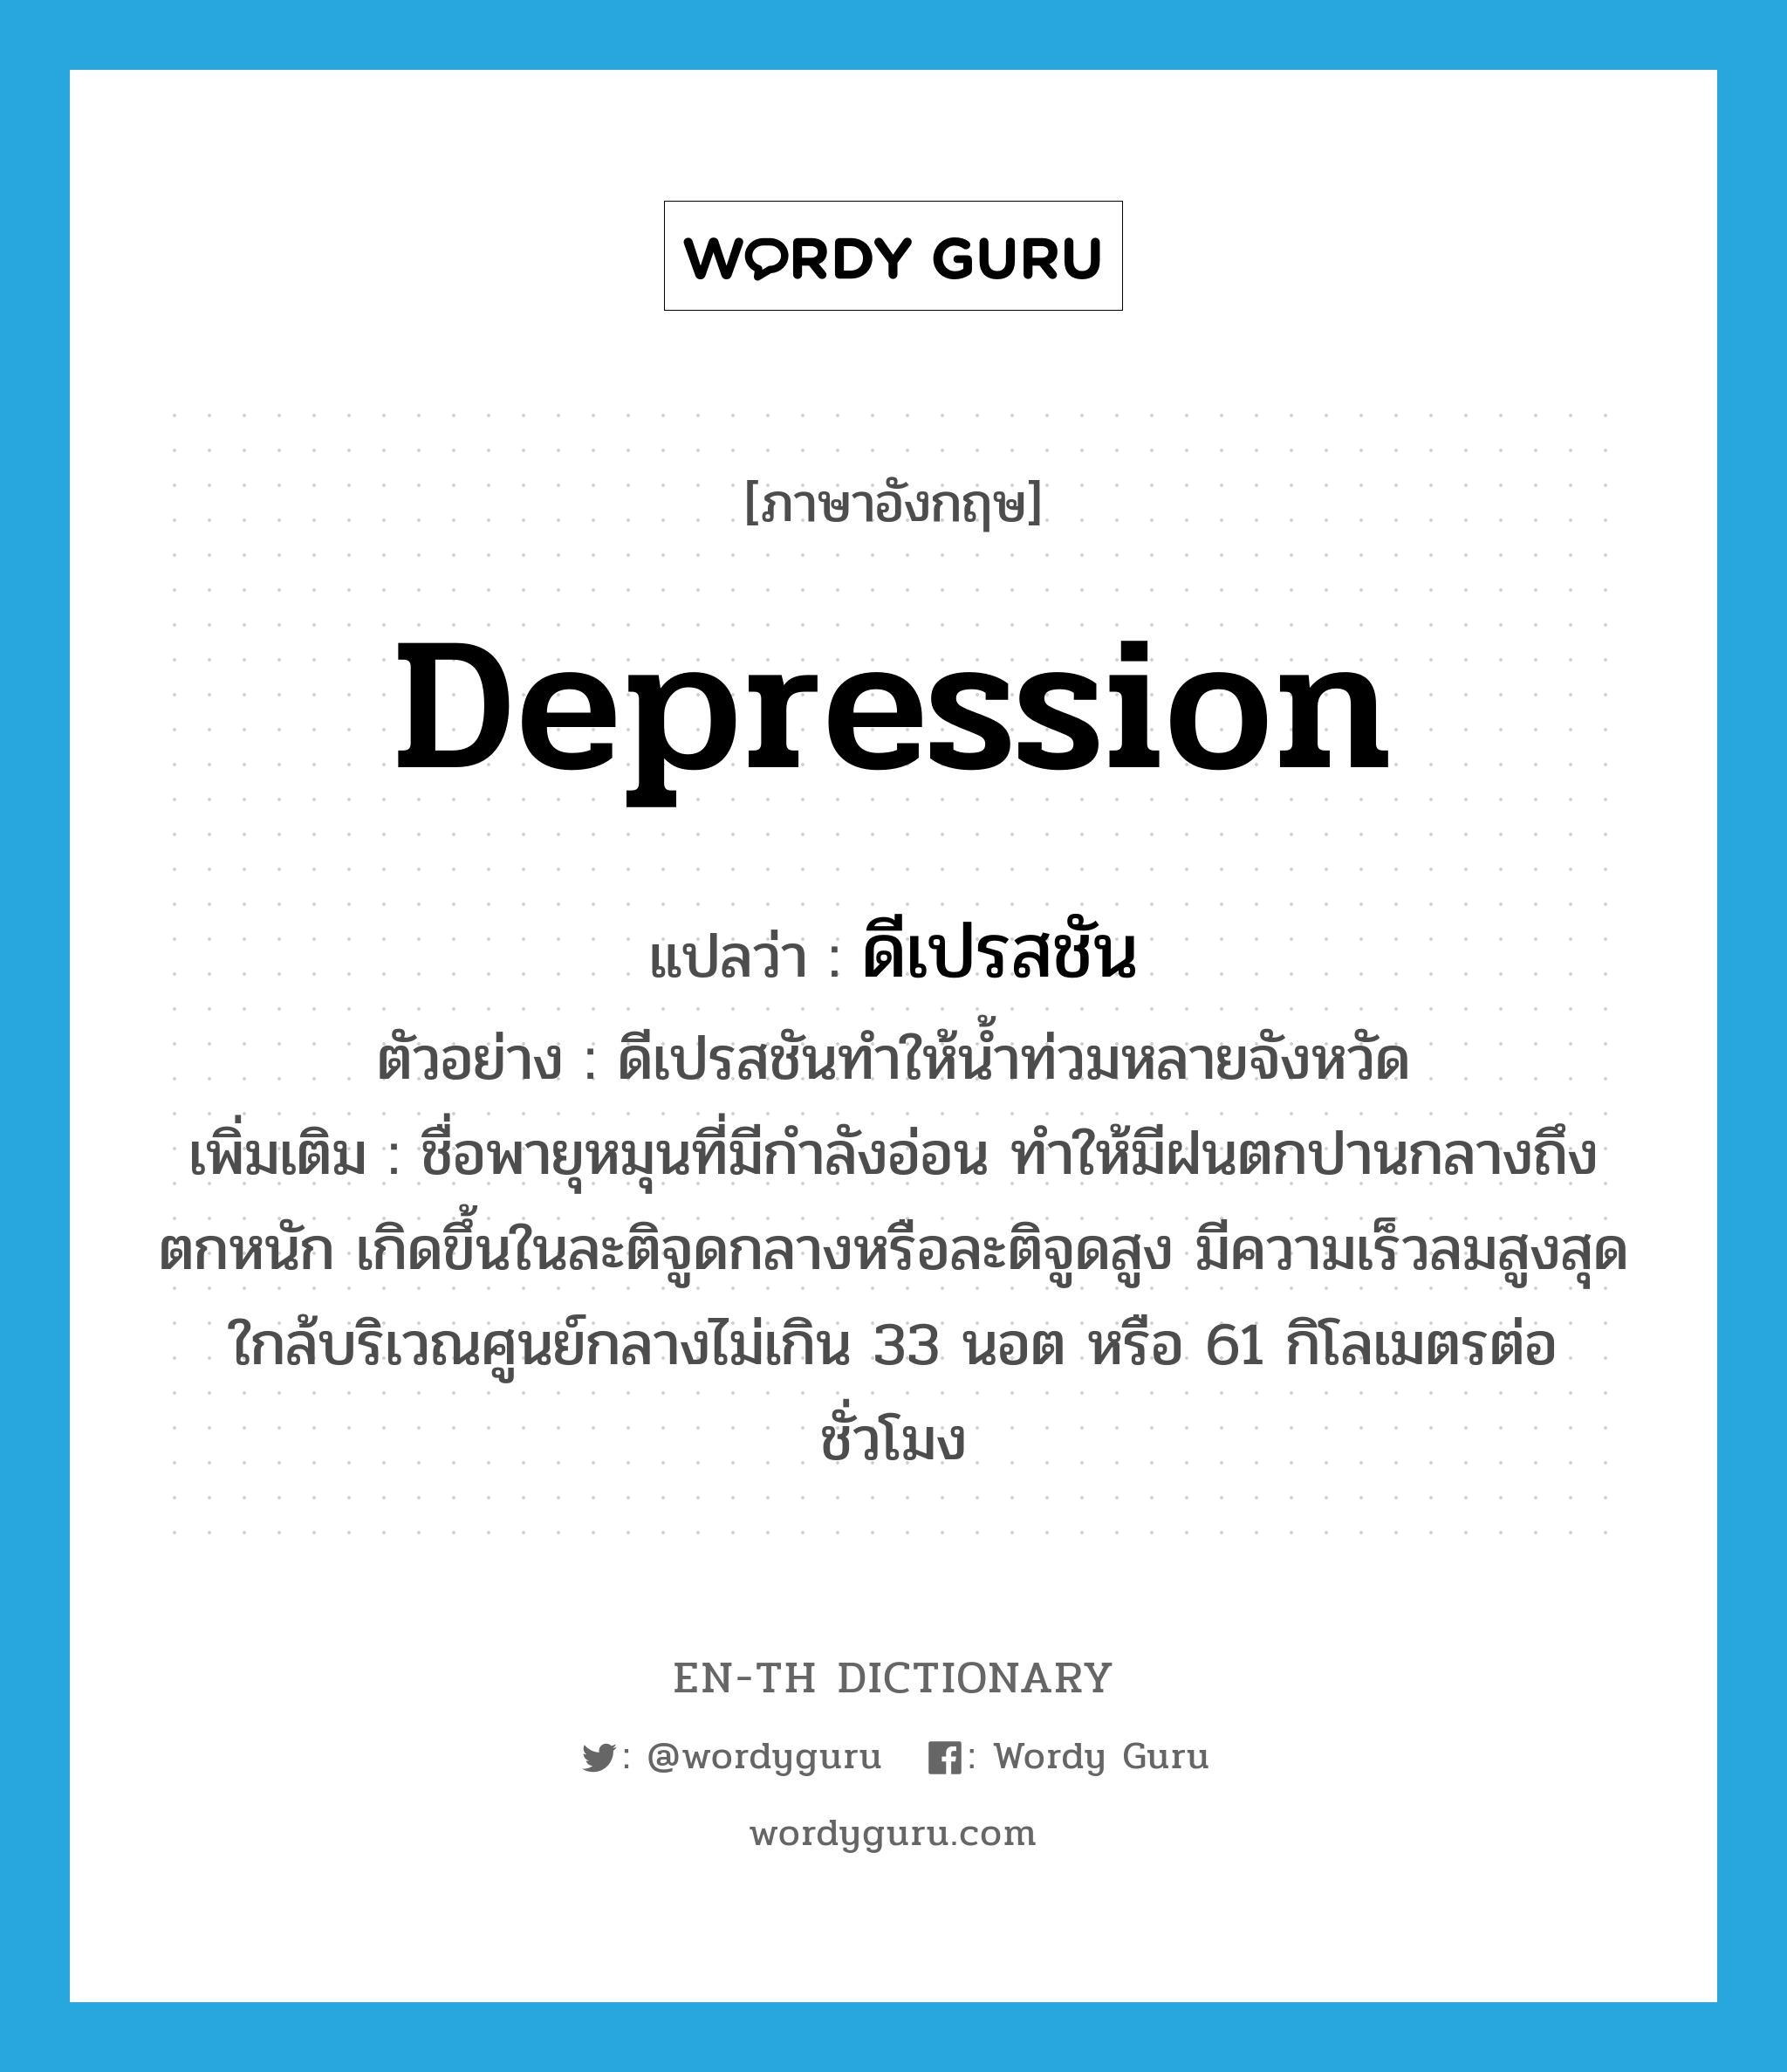 depression แปลว่า?, คำศัพท์ภาษาอังกฤษ depression แปลว่า ดีเปรสชัน ประเภท N ตัวอย่าง ดีเปรสชันทำให้น้ำท่วมหลายจังหวัด เพิ่มเติม ชื่อพายุหมุนที่มีกำลังอ่อน ทำให้มีฝนตกปานกลางถึงตกหนัก เกิดขึ้นในละติจูดกลางหรือละติจูดสูง มีความเร็วลมสูงสุดใกล้บริเวณศูนย์กลางไม่เกิน 33 นอต หรือ 61 กิโลเมตรต่อชั่วโมง หมวด N